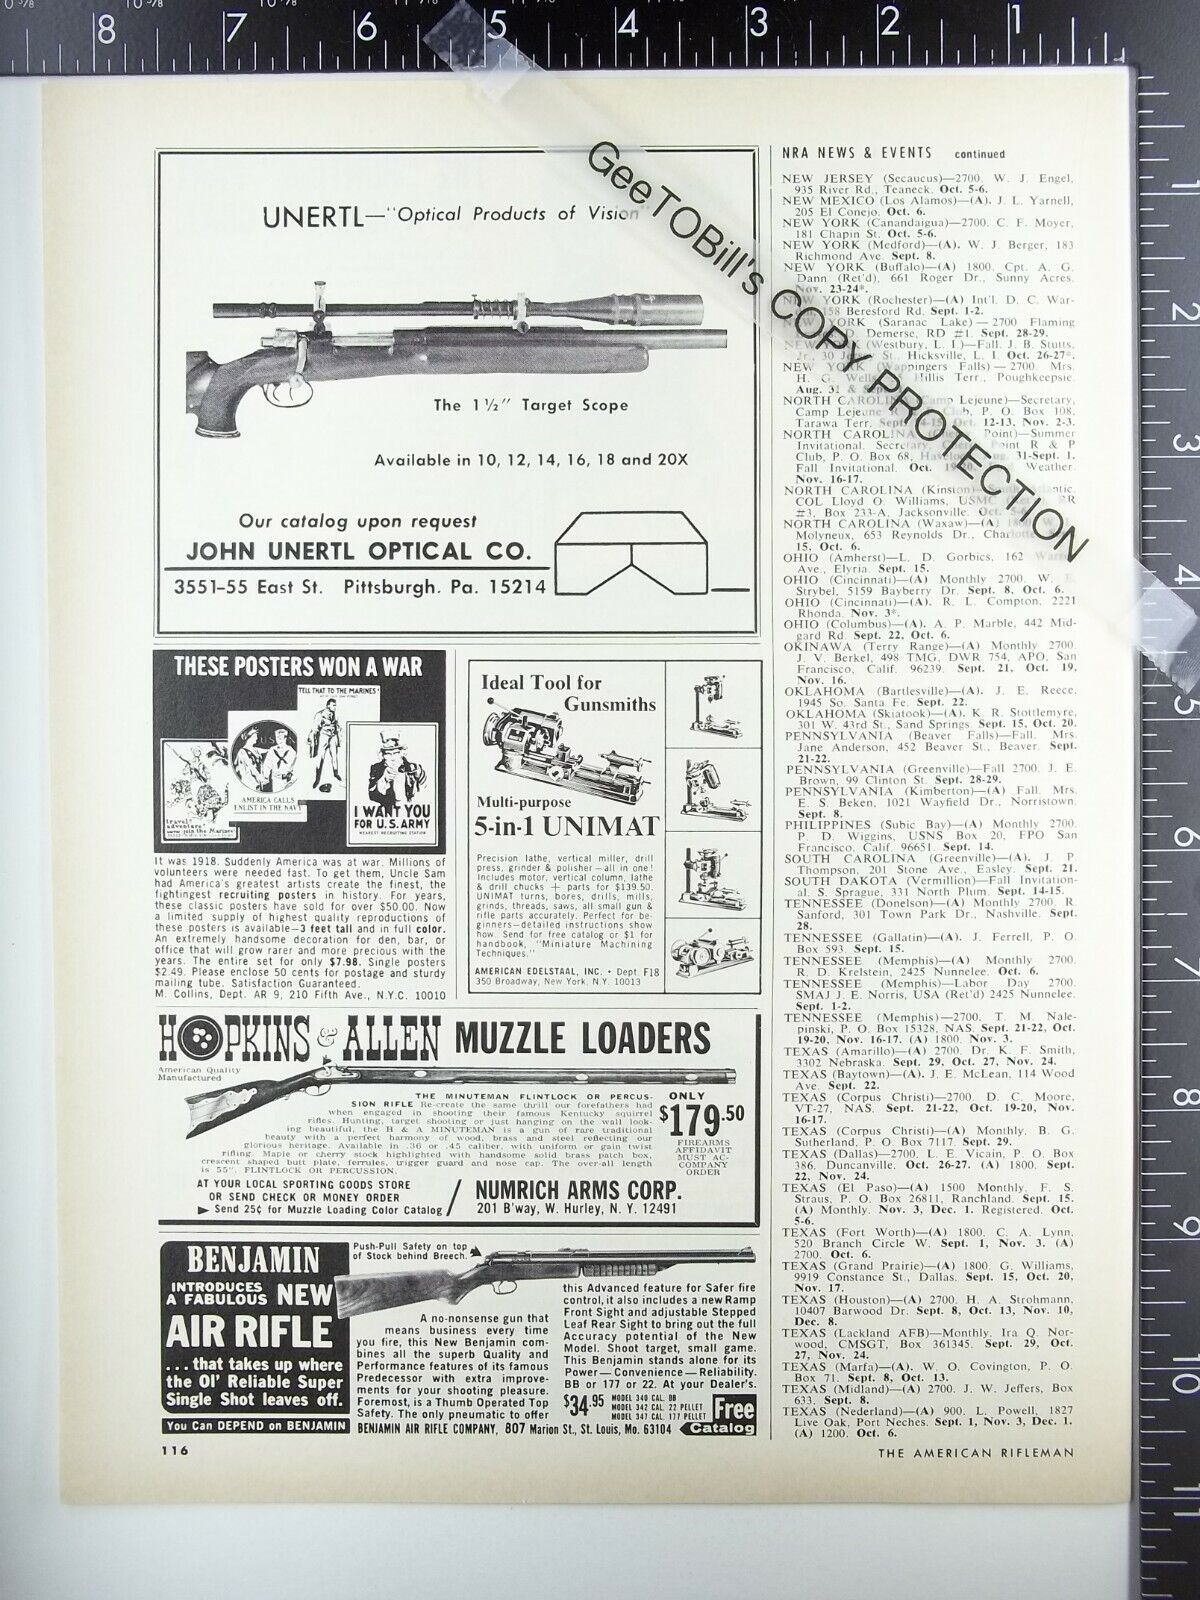 1968 Benjamin Air rifle model 340 342 347 Hopkin & Allen Muzzle loader Unimat ad